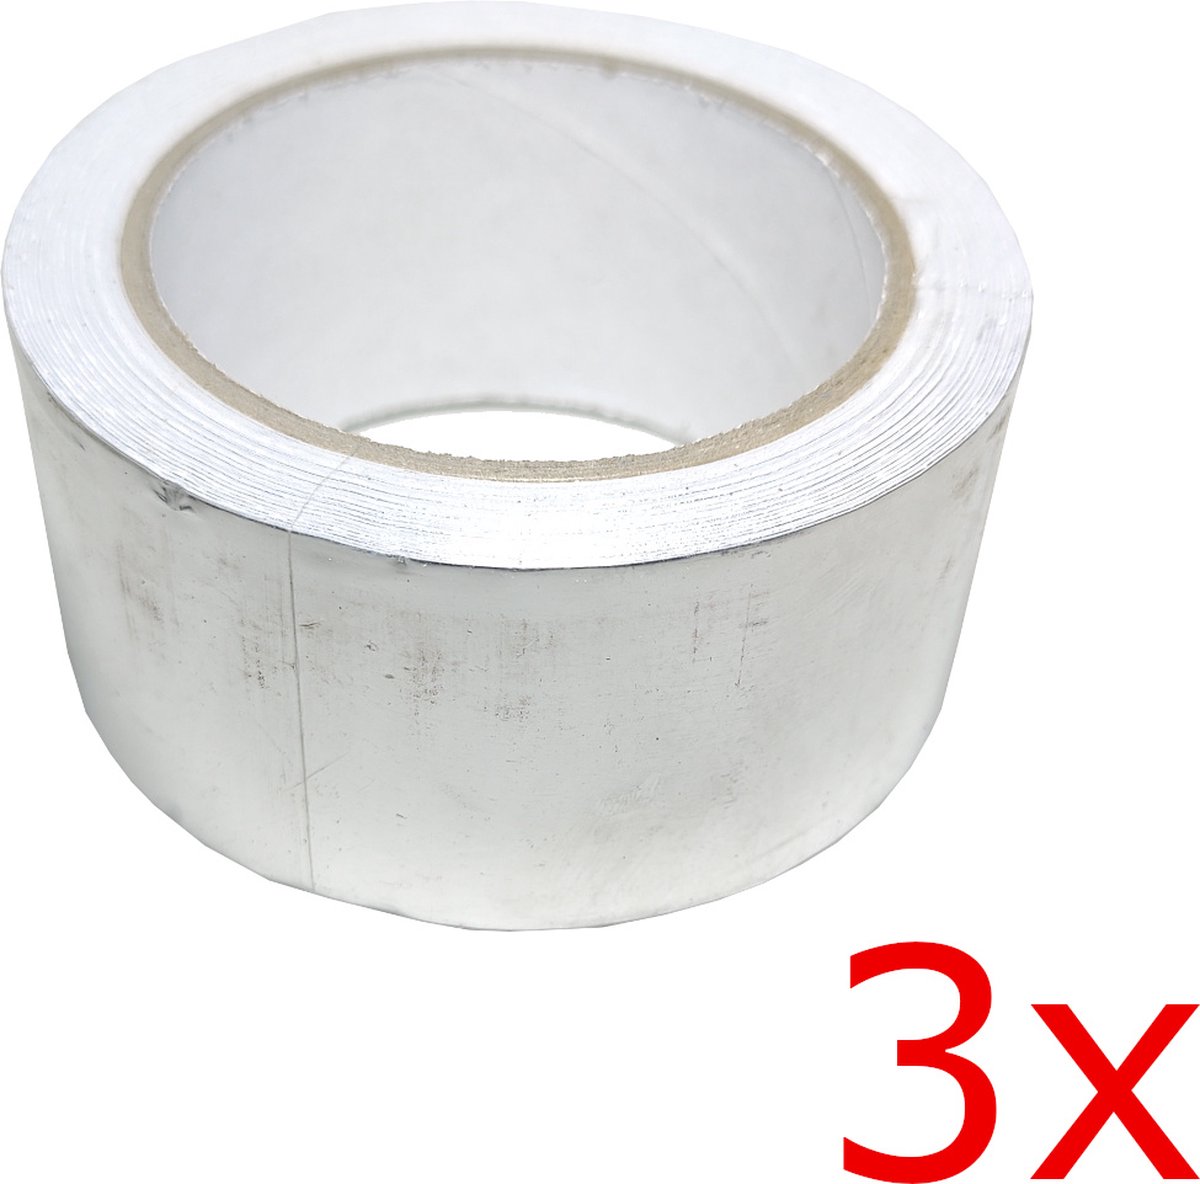 3X Aluminium rol tape 25m x 50mm x 0,03mm Isolatie, Dichten Van Naden, Waterdicht, Hittebestendig